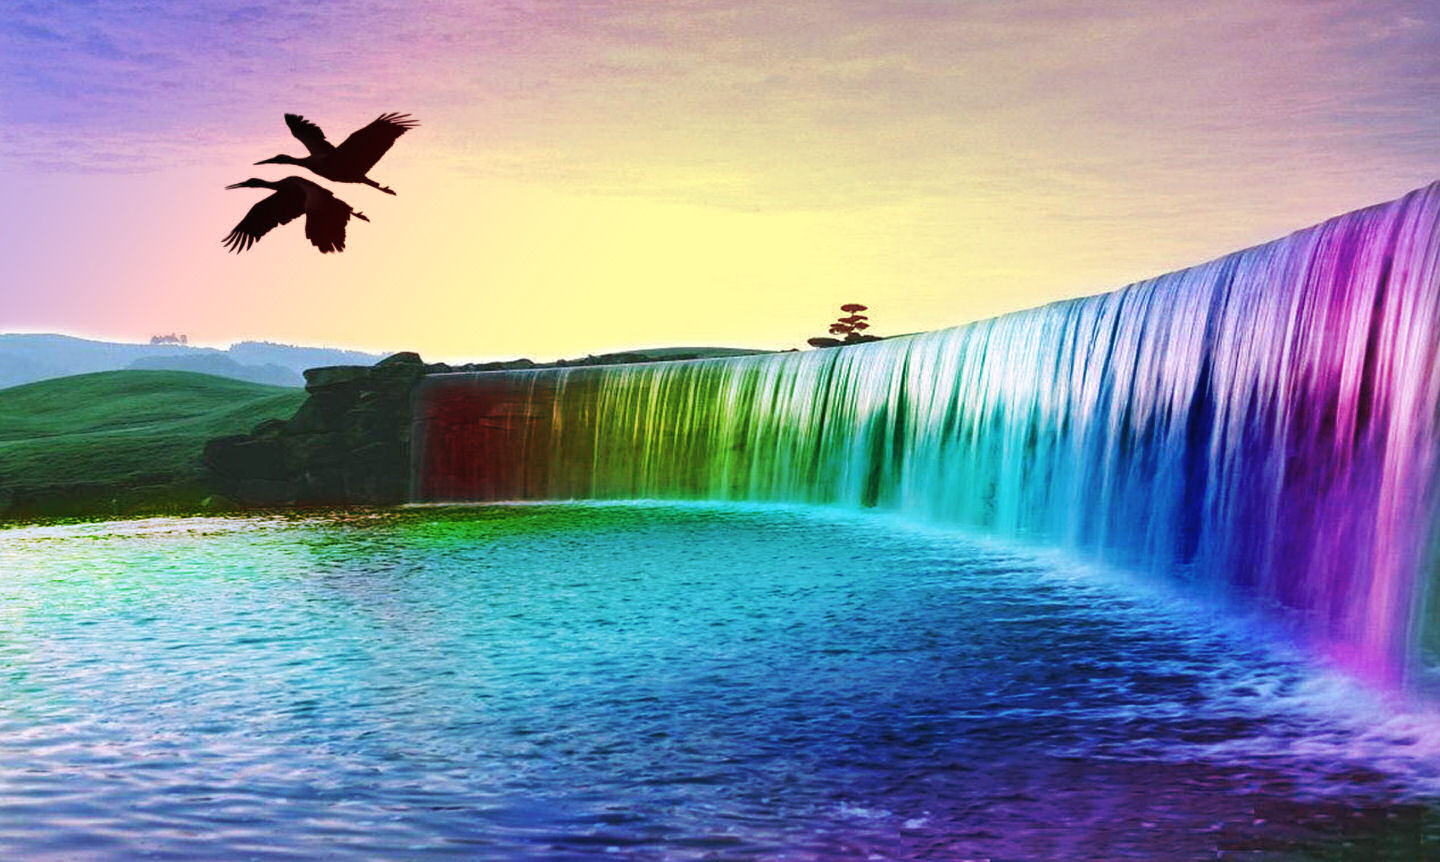 Beautiful Images Of Unusual Underwater Waterfall Nature - Full Size  Wallpaper Hd Download - 1440x862 Wallpaper 